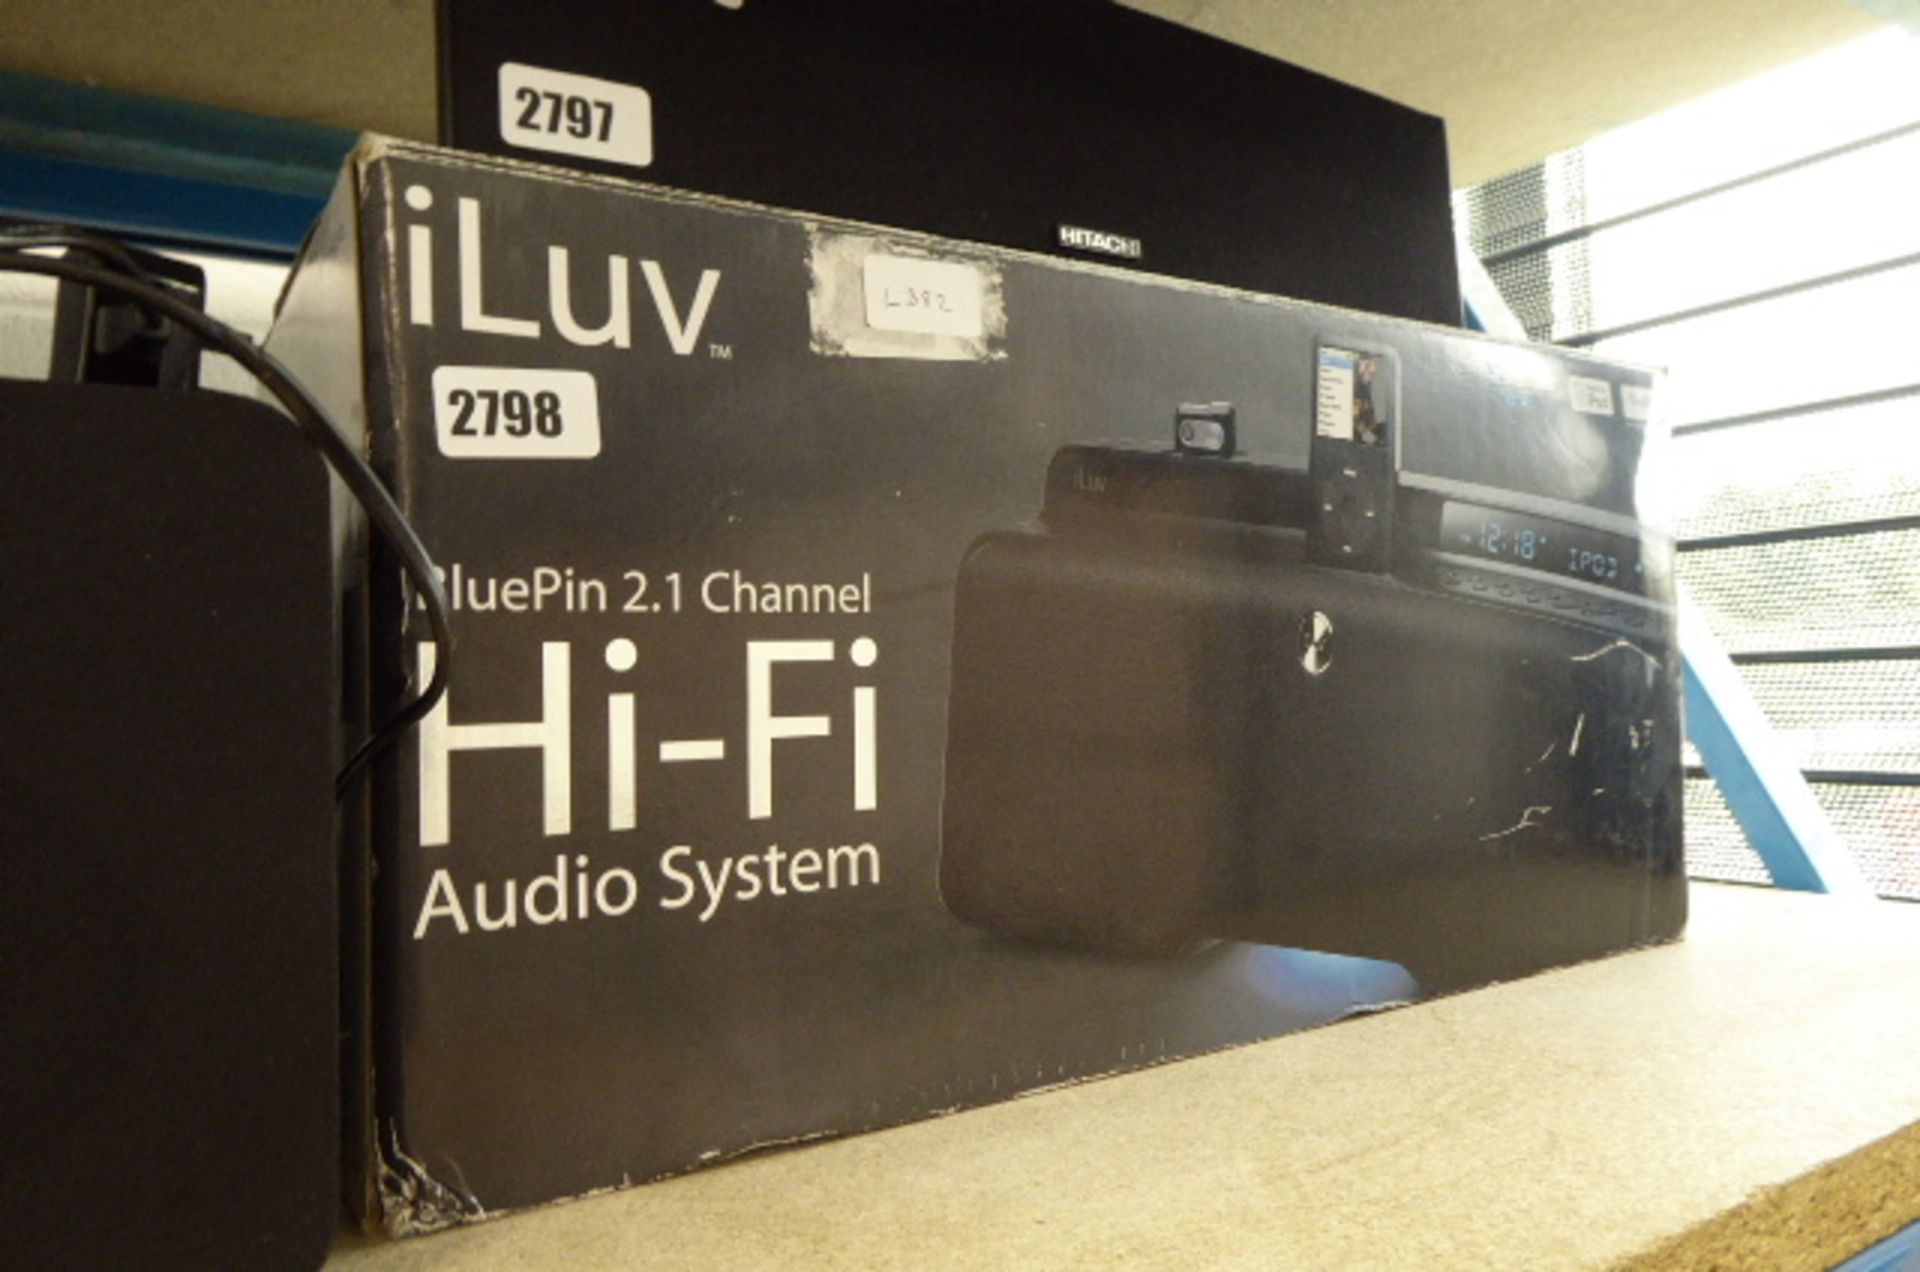 iLuv blue pin 2.1 channel hifi audio system